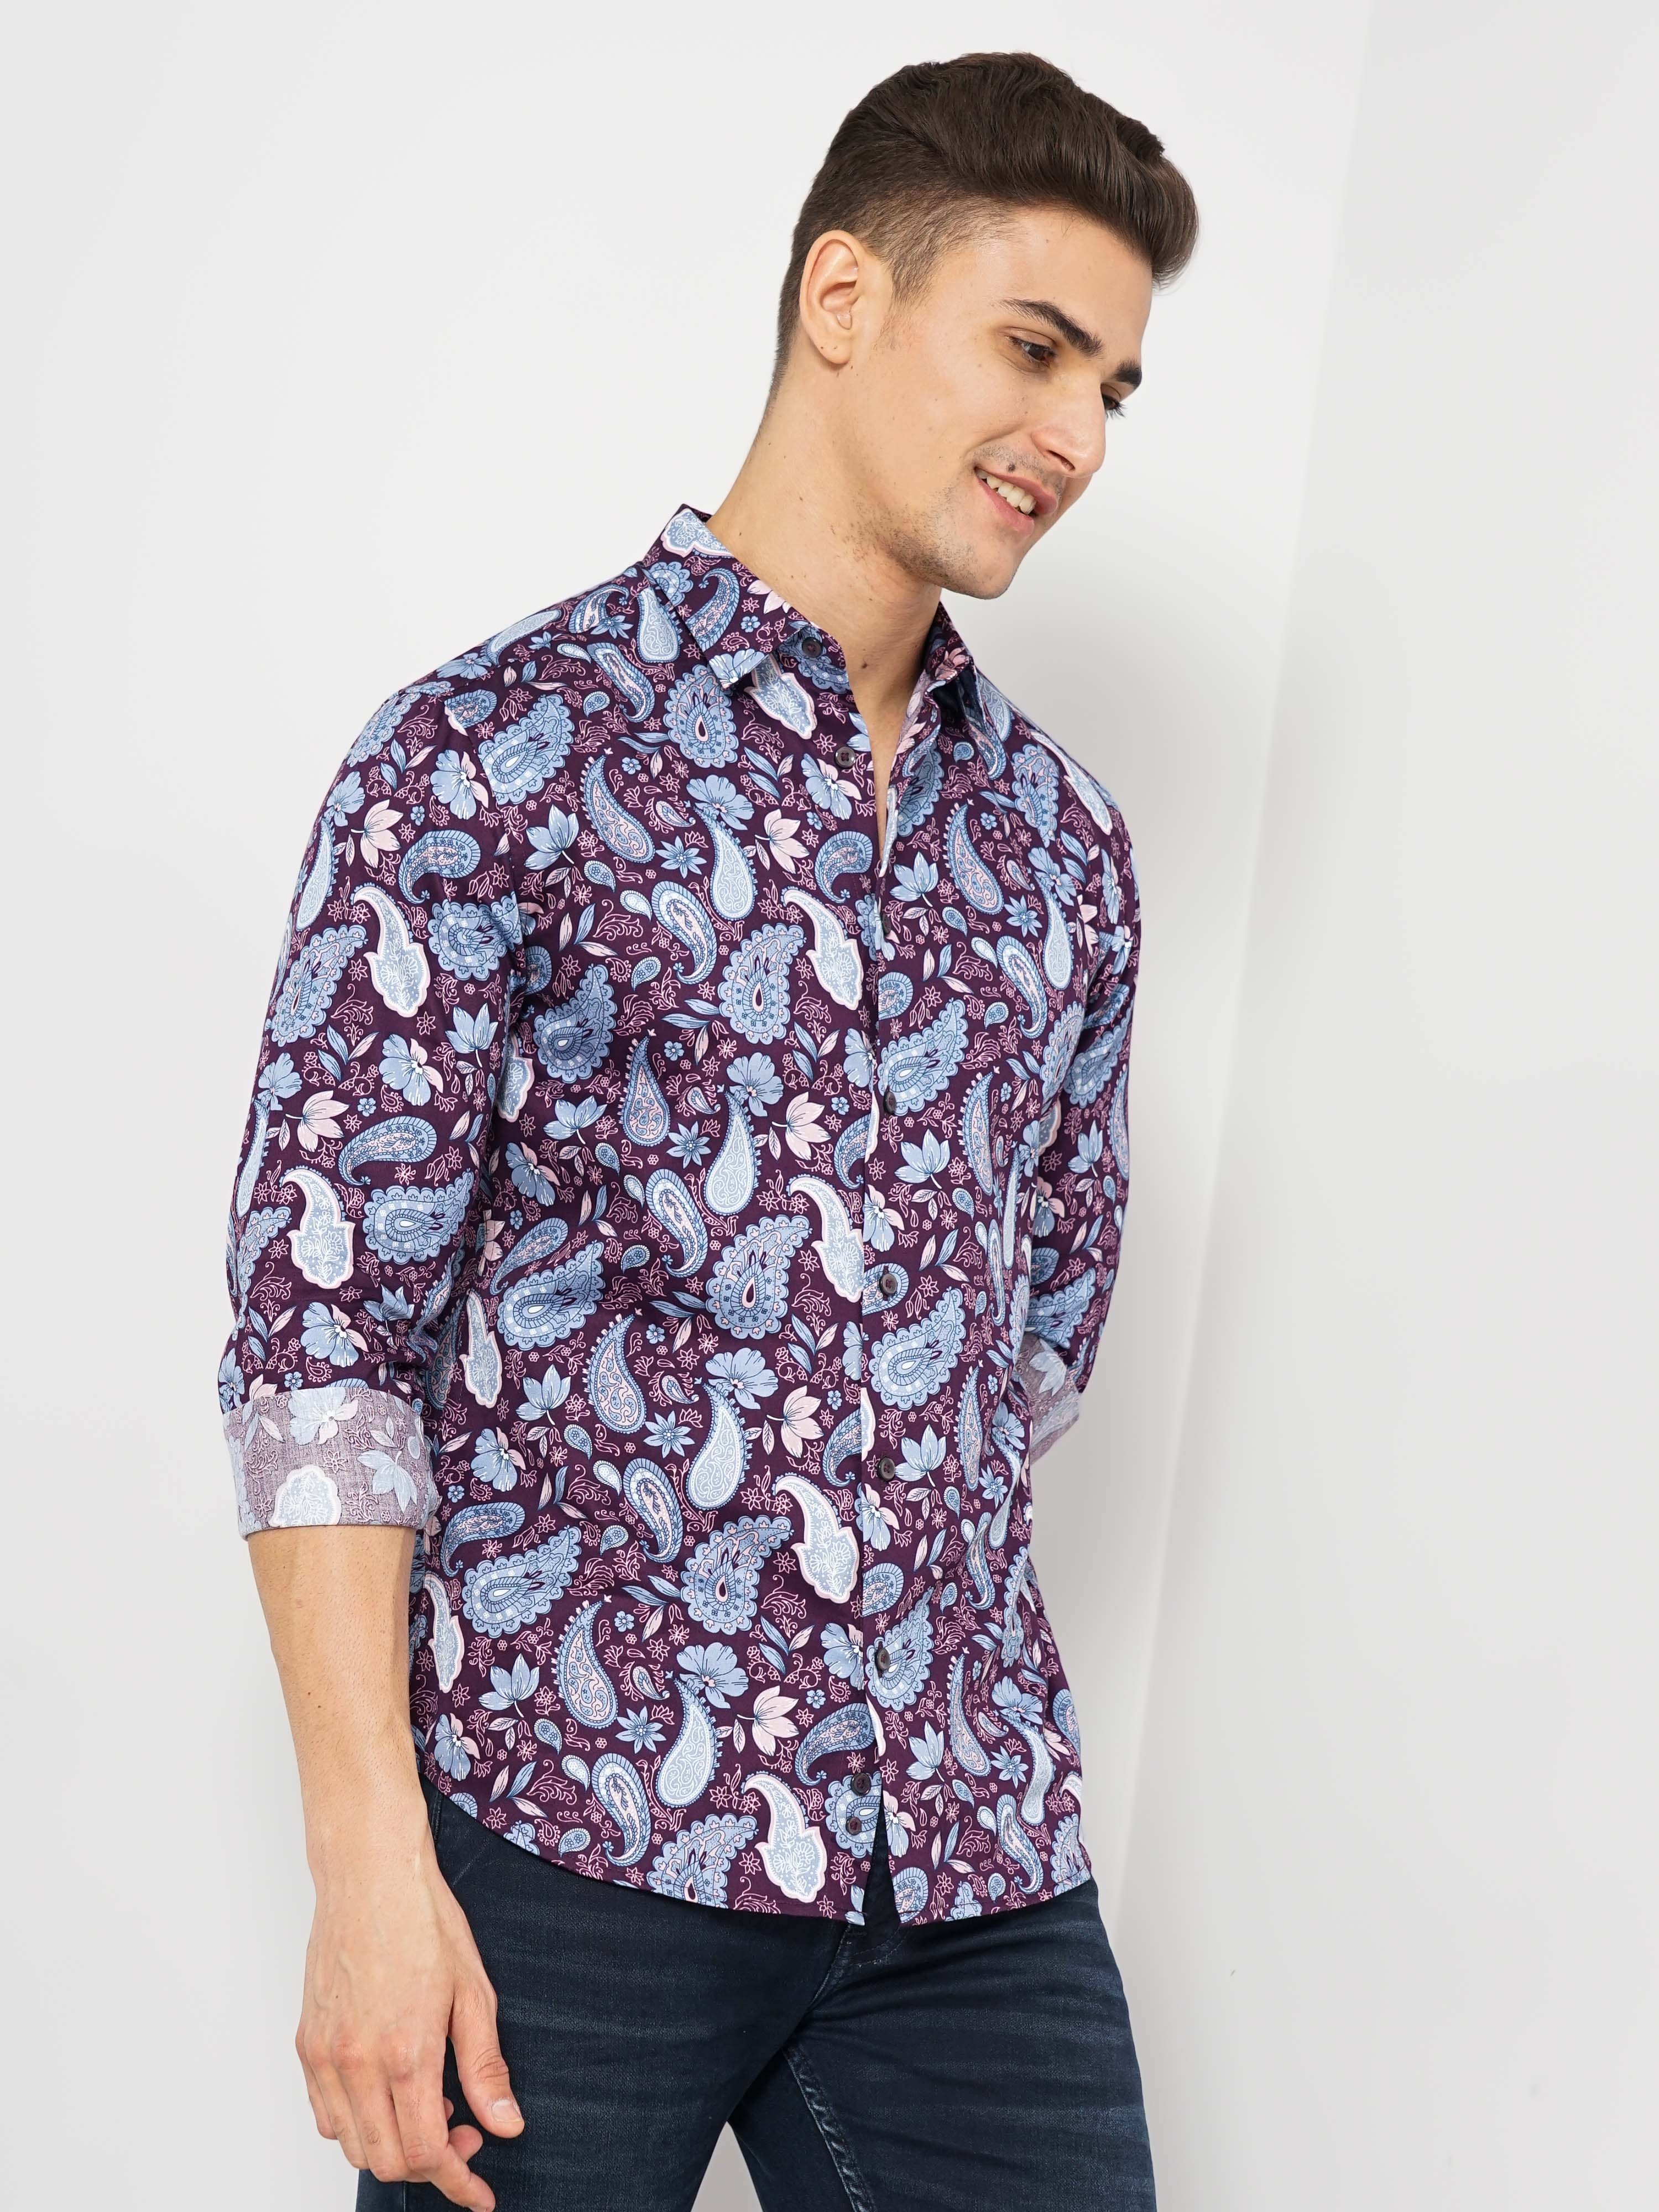 Men's Purple Printed Casual Shirts